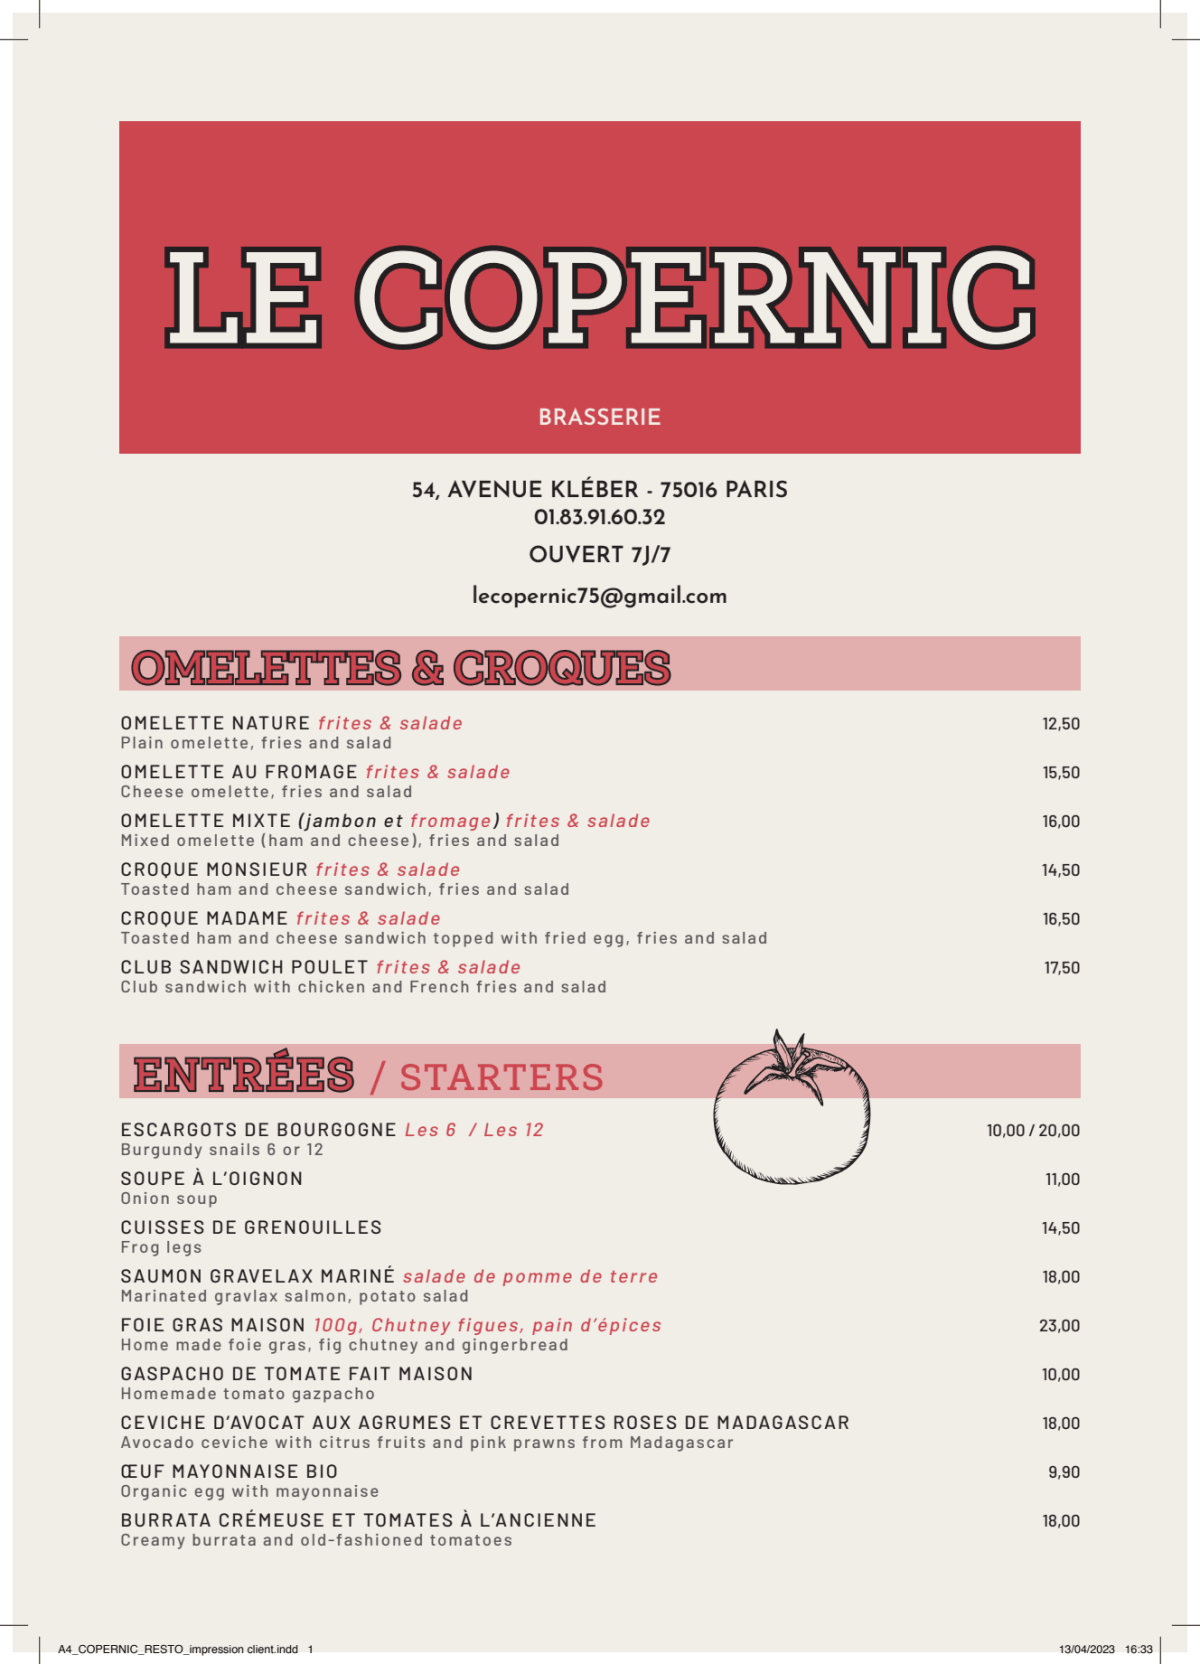 Le Copernic menu